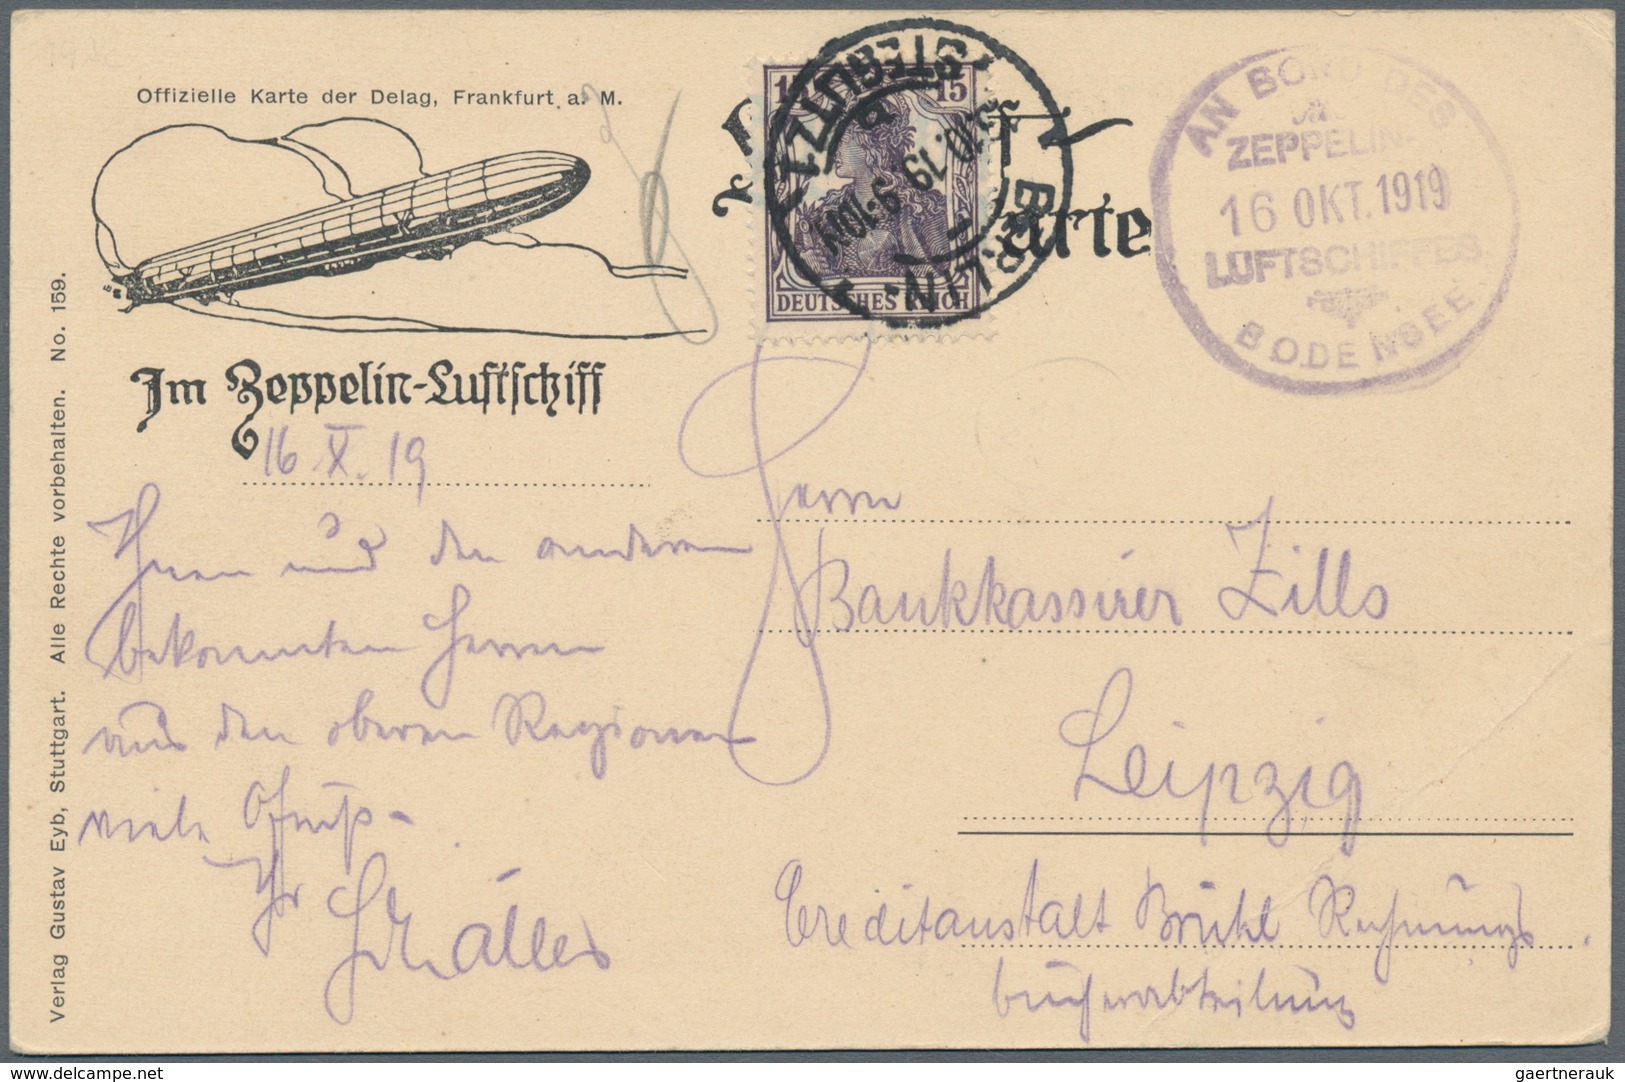 00637 Zeppelinpost Deutschland: 1919, LZ 120 Bodensee, Delag Card From "Berlin-Steglitz" With Board Cancel - Posta Aerea & Zeppelin